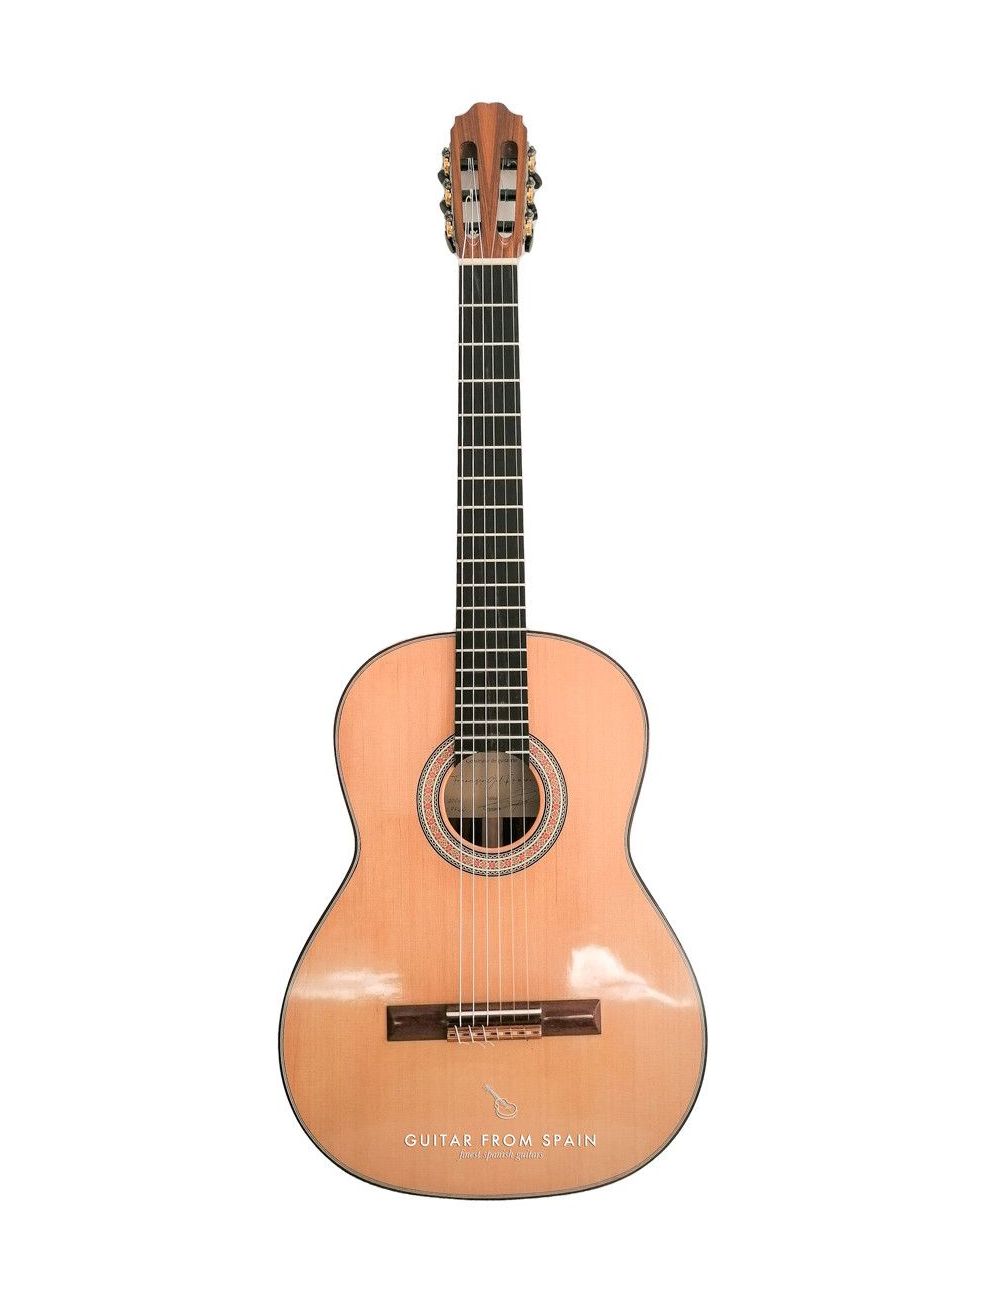 Francisco Gil Modelo 1 Guitare classique